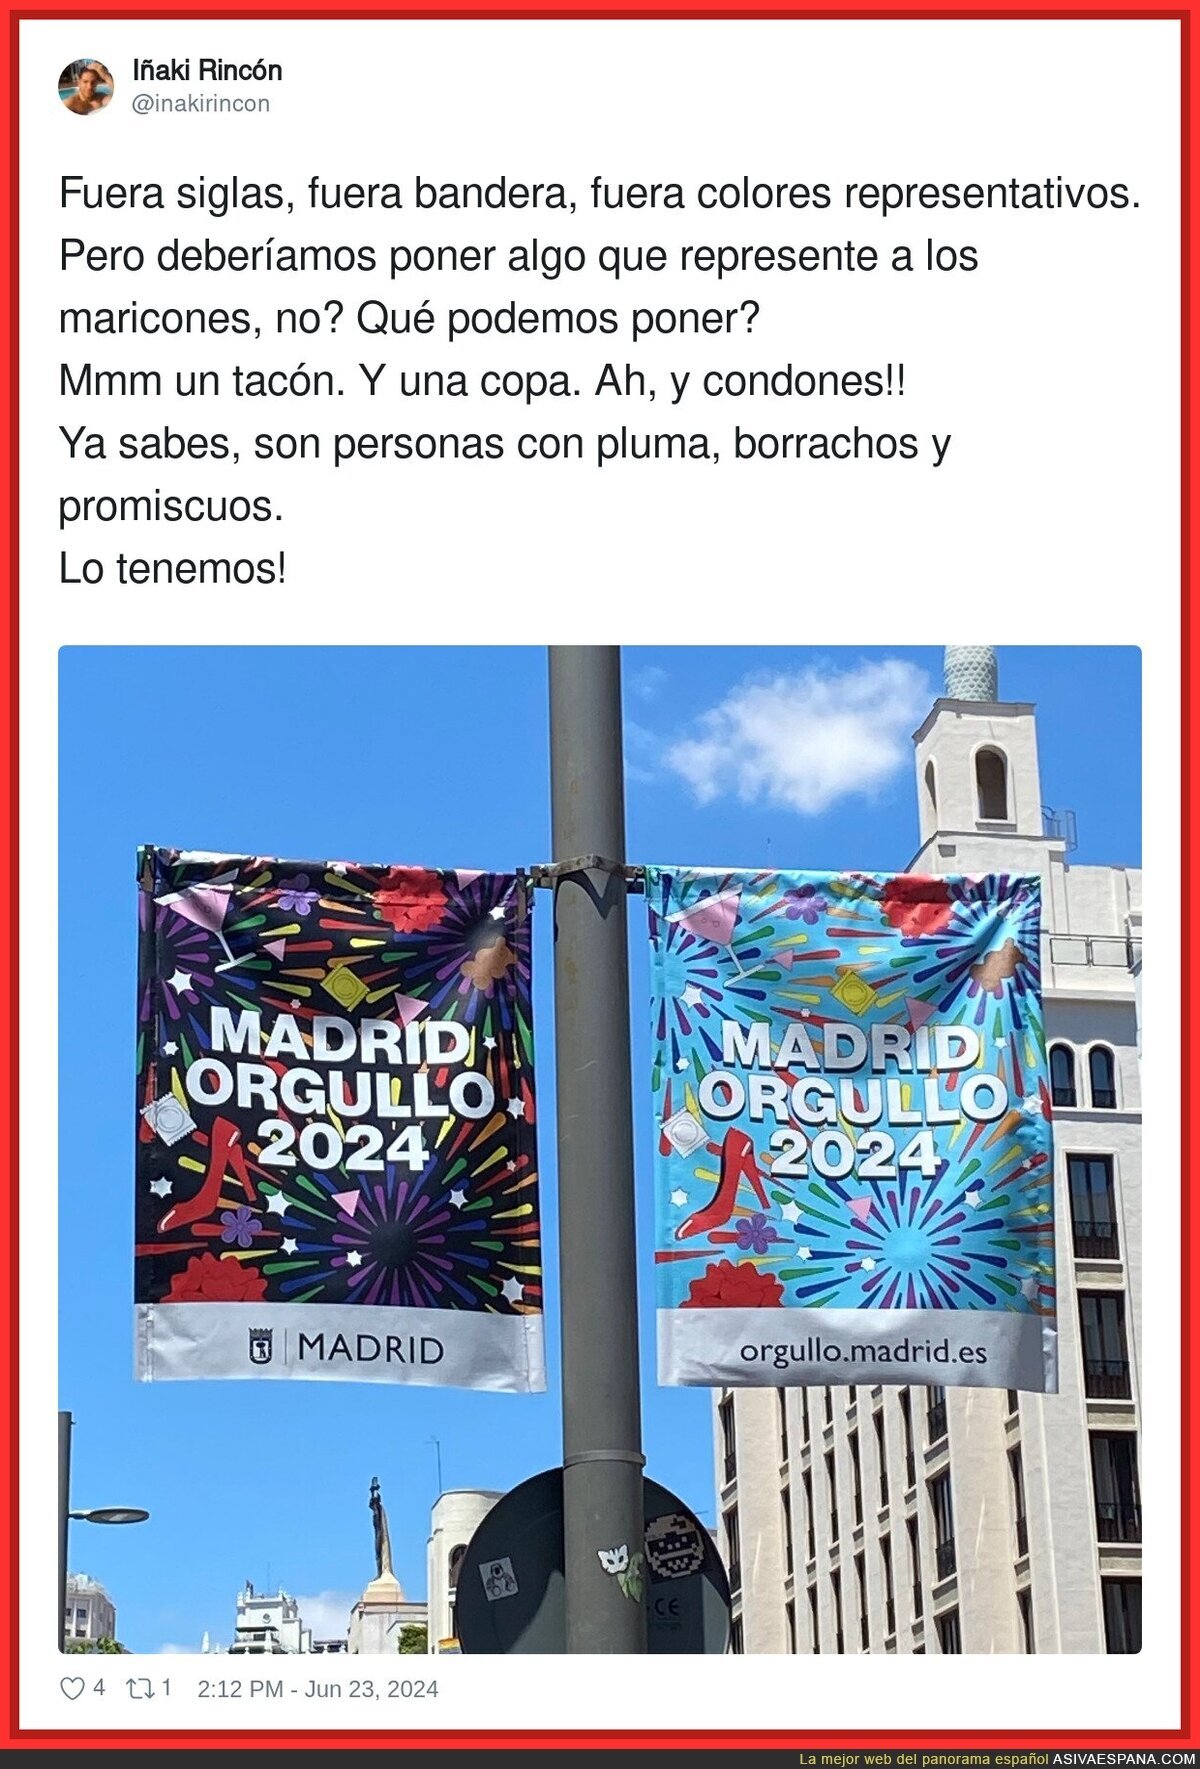 Así retrata Madrid el Orgullo 2024